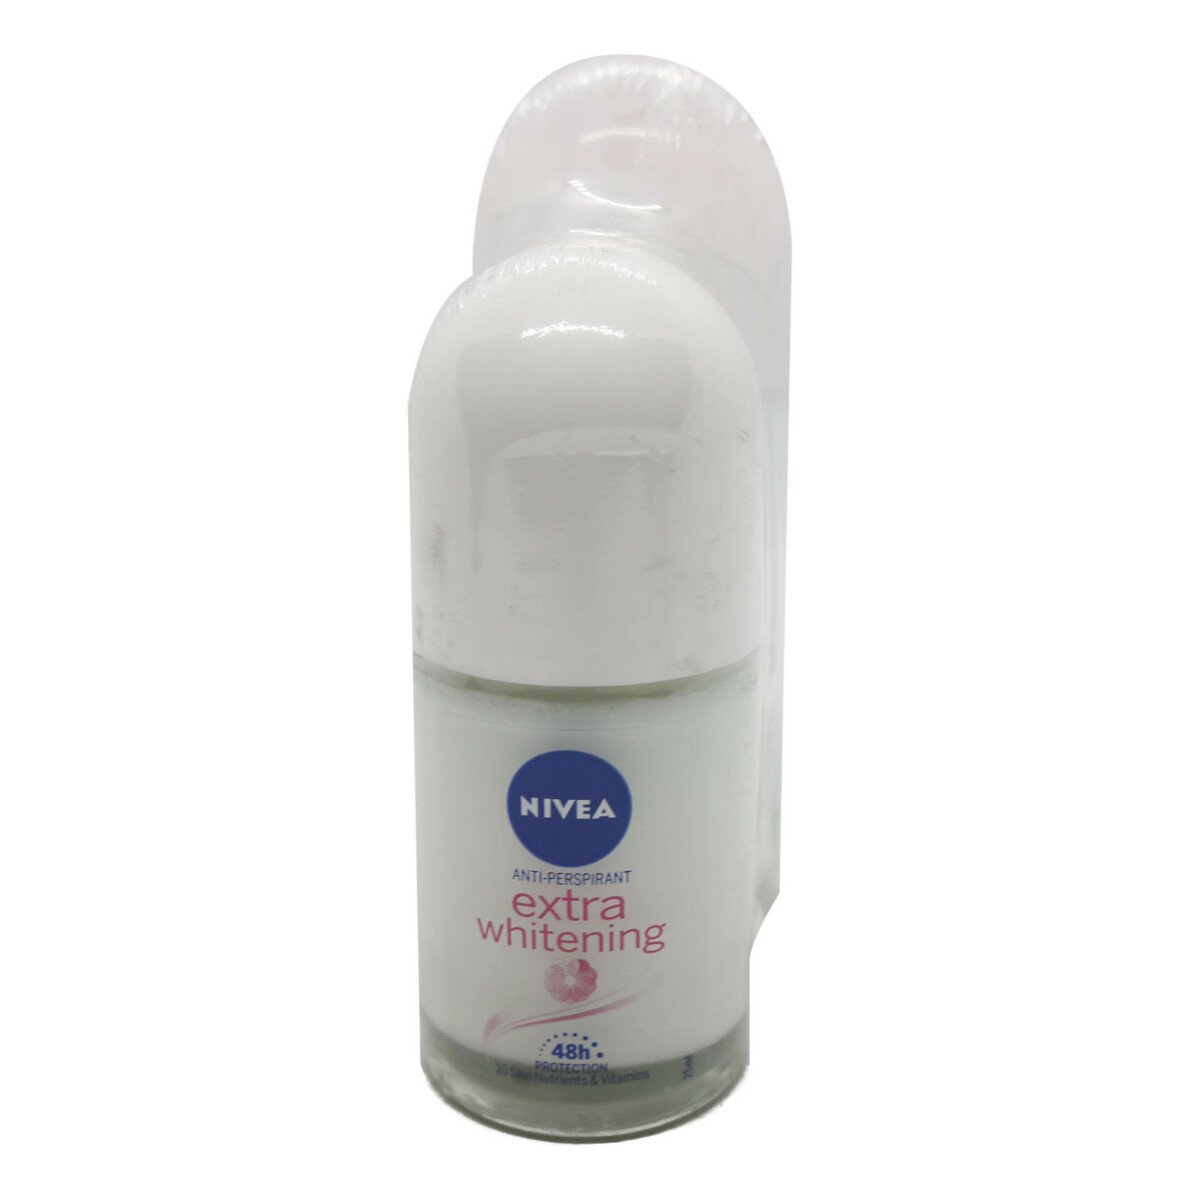 Nivea Female Deodorant Pearl & Beauty 50ml FOC 25ml